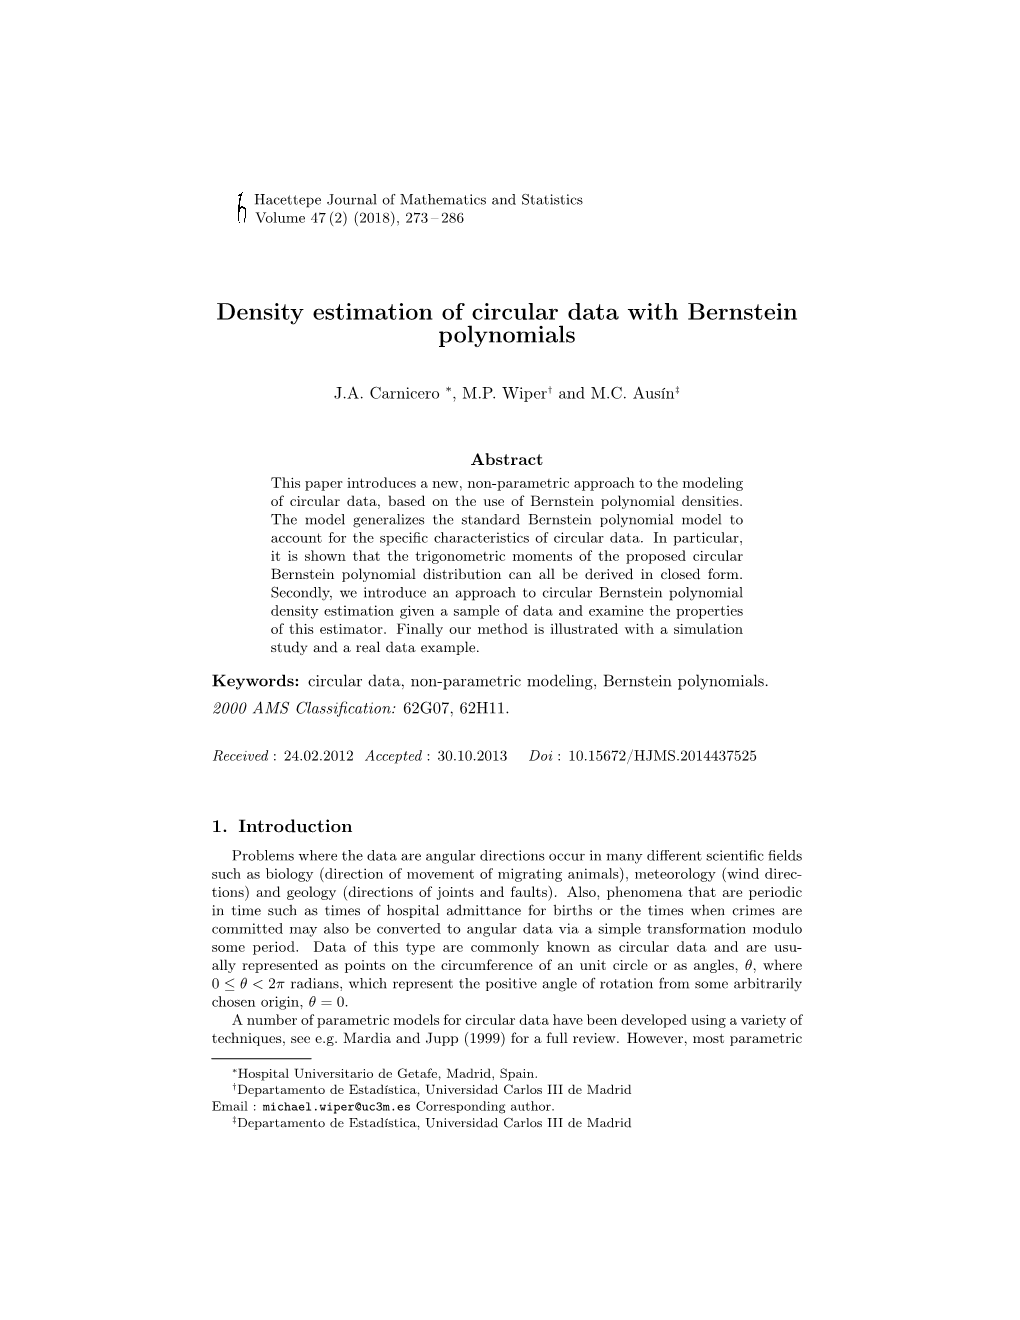 Density Estimation of Circular Data with Bernstein Polynomials